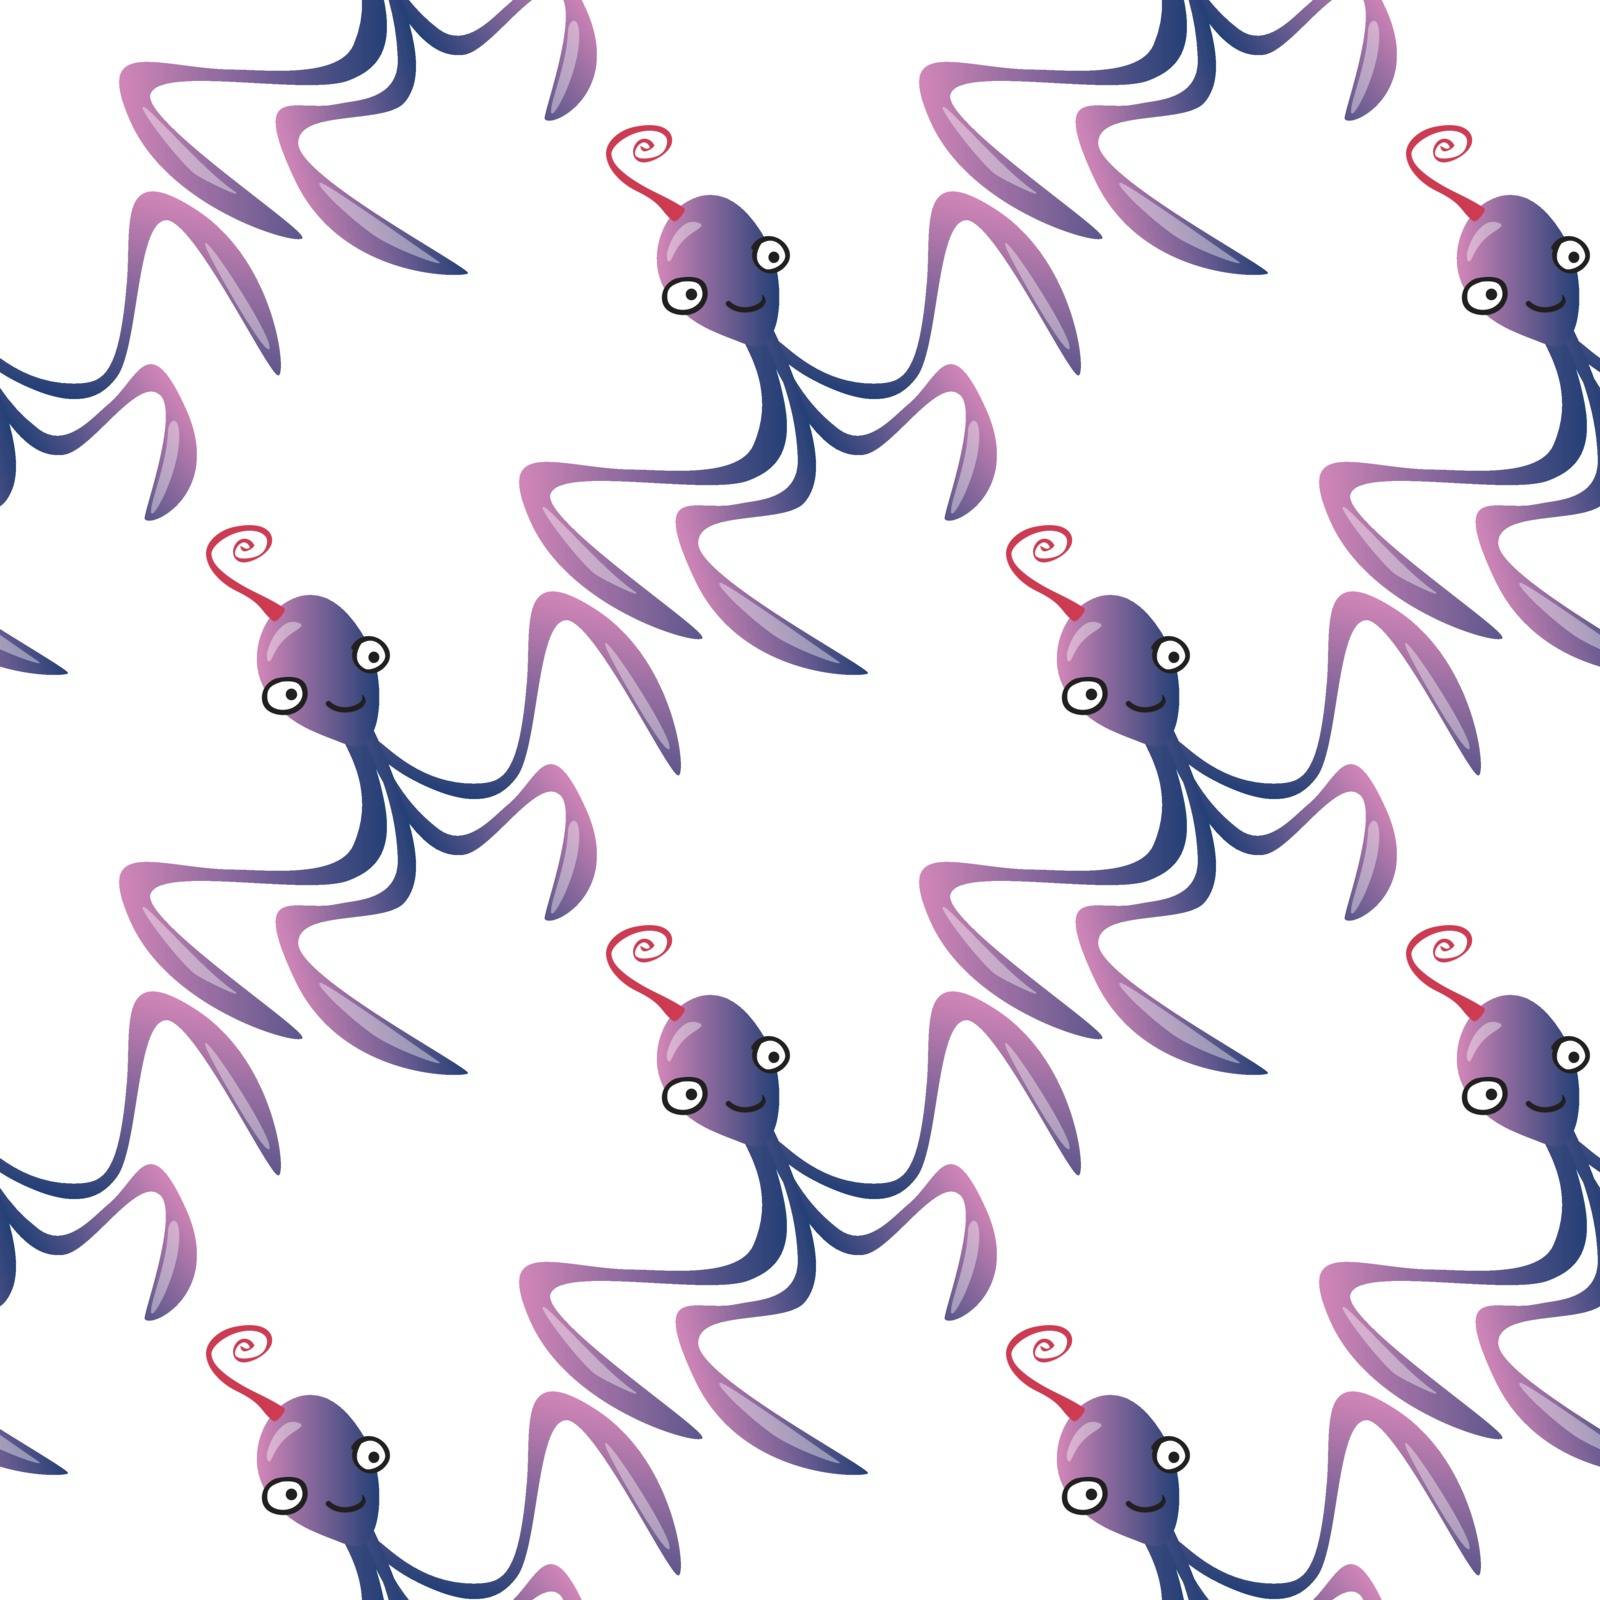 Octopus character marine seamless pattern background. Ocean animals vector